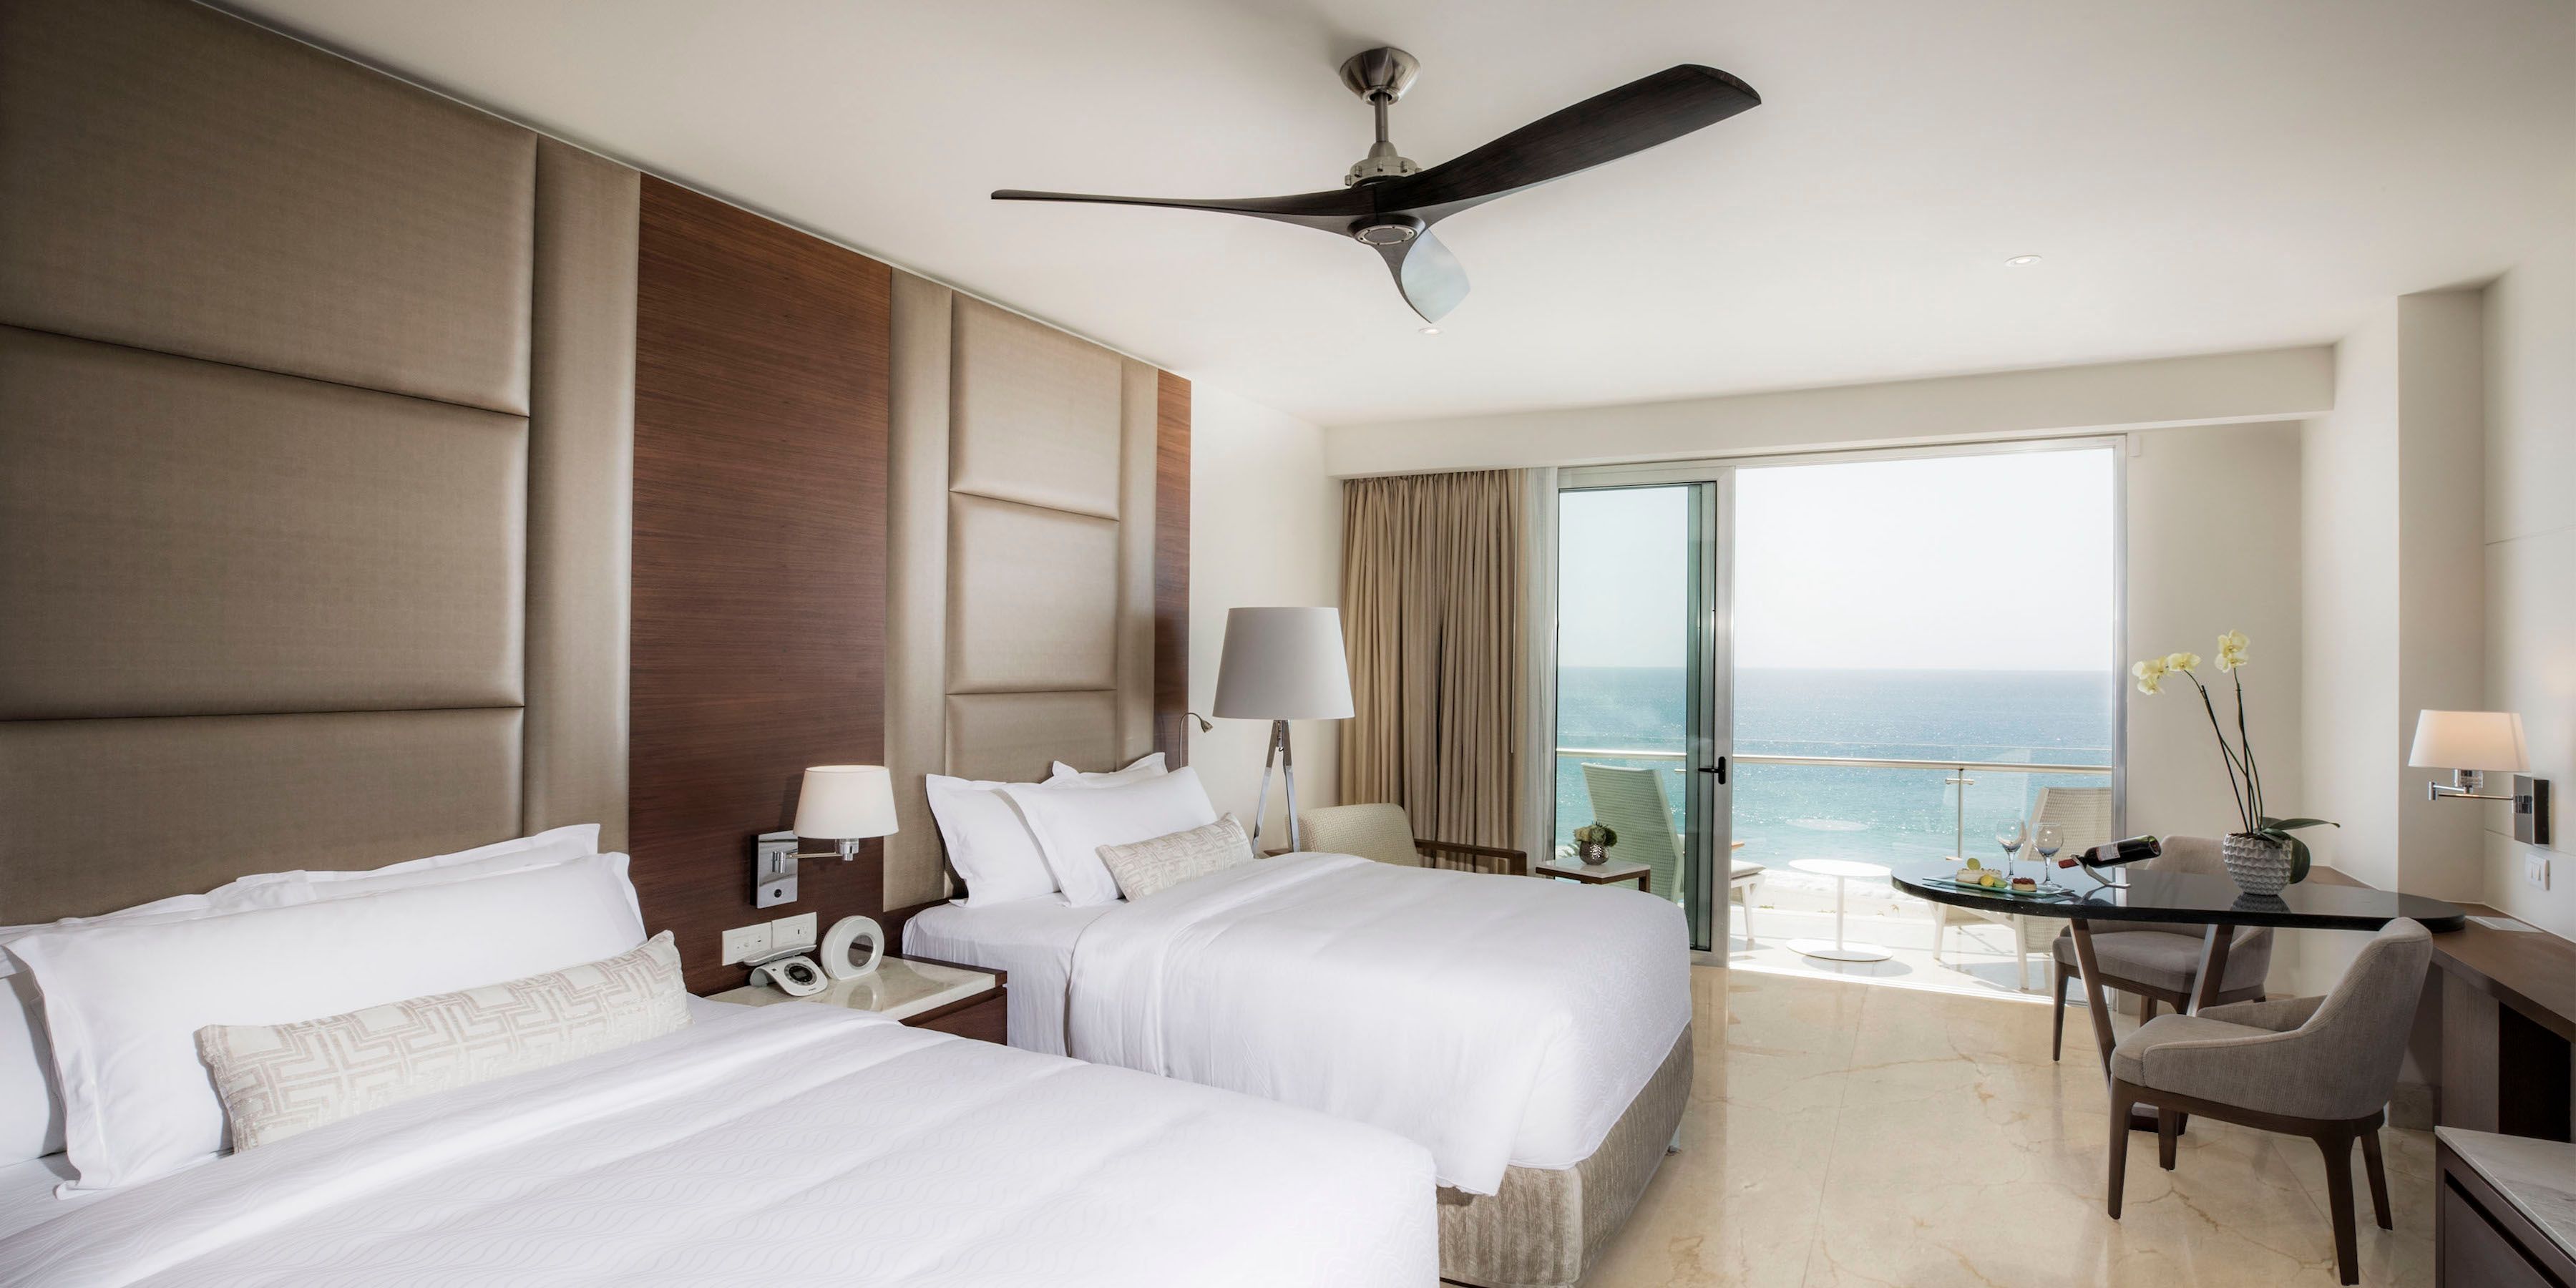 Oceanview luxury accommodation